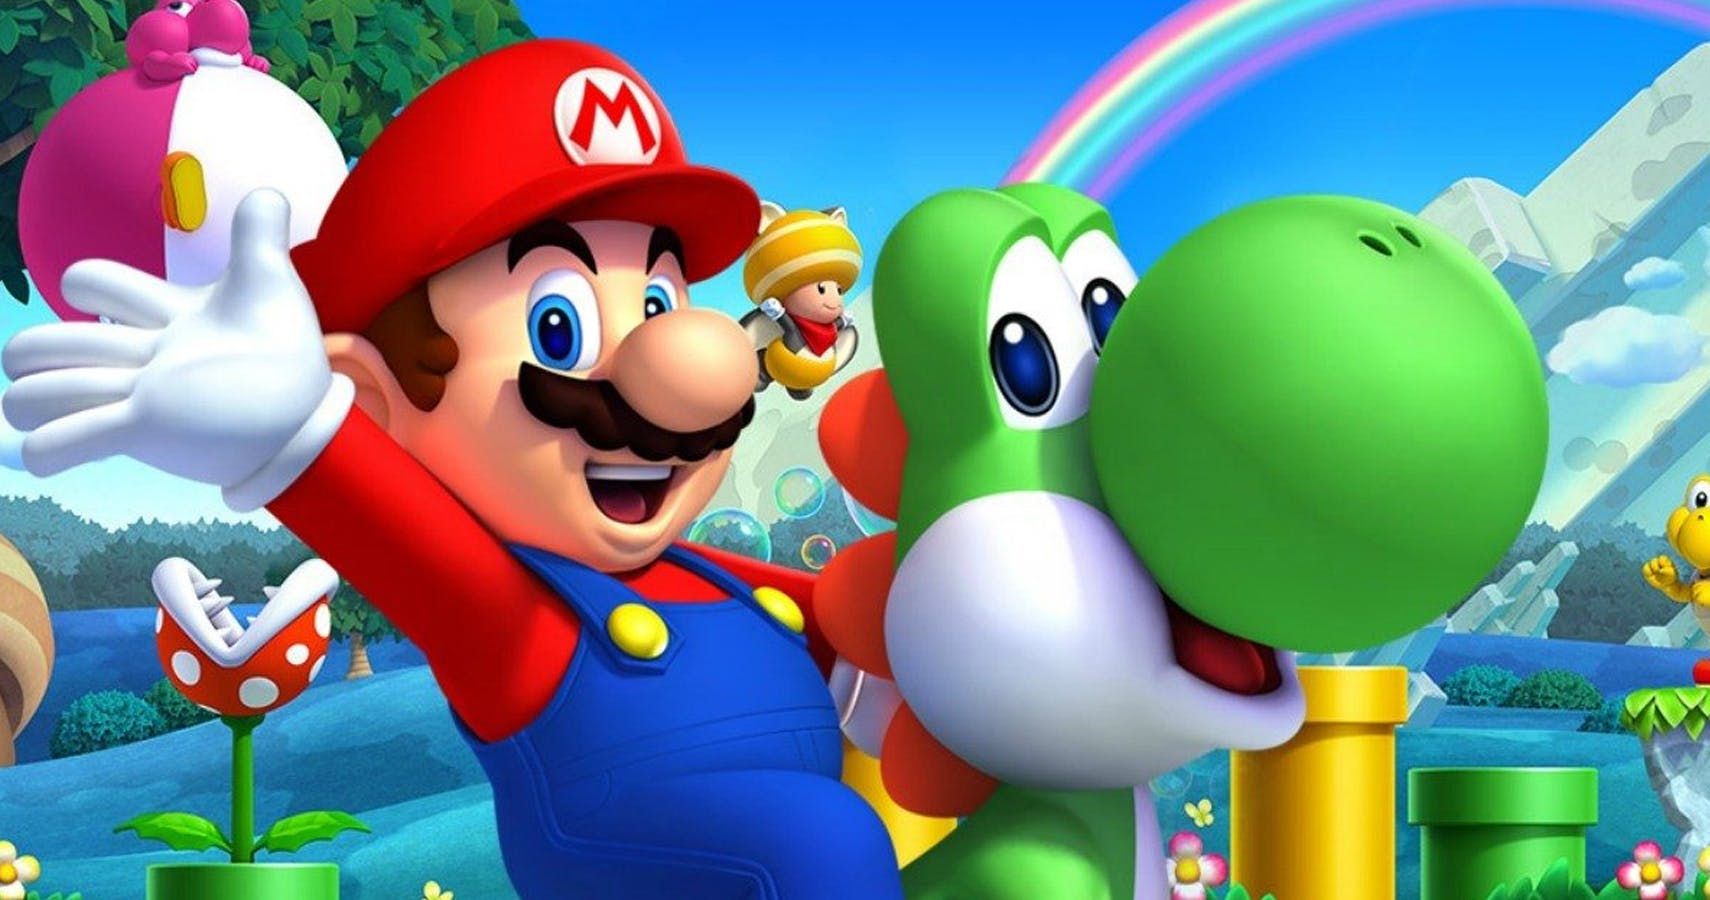 Mario brothers. Super Mario Bros 35 Nintendo Switch. Нью супер Марио БРОС. New super Mario Bros. Игра. Mario 1999.